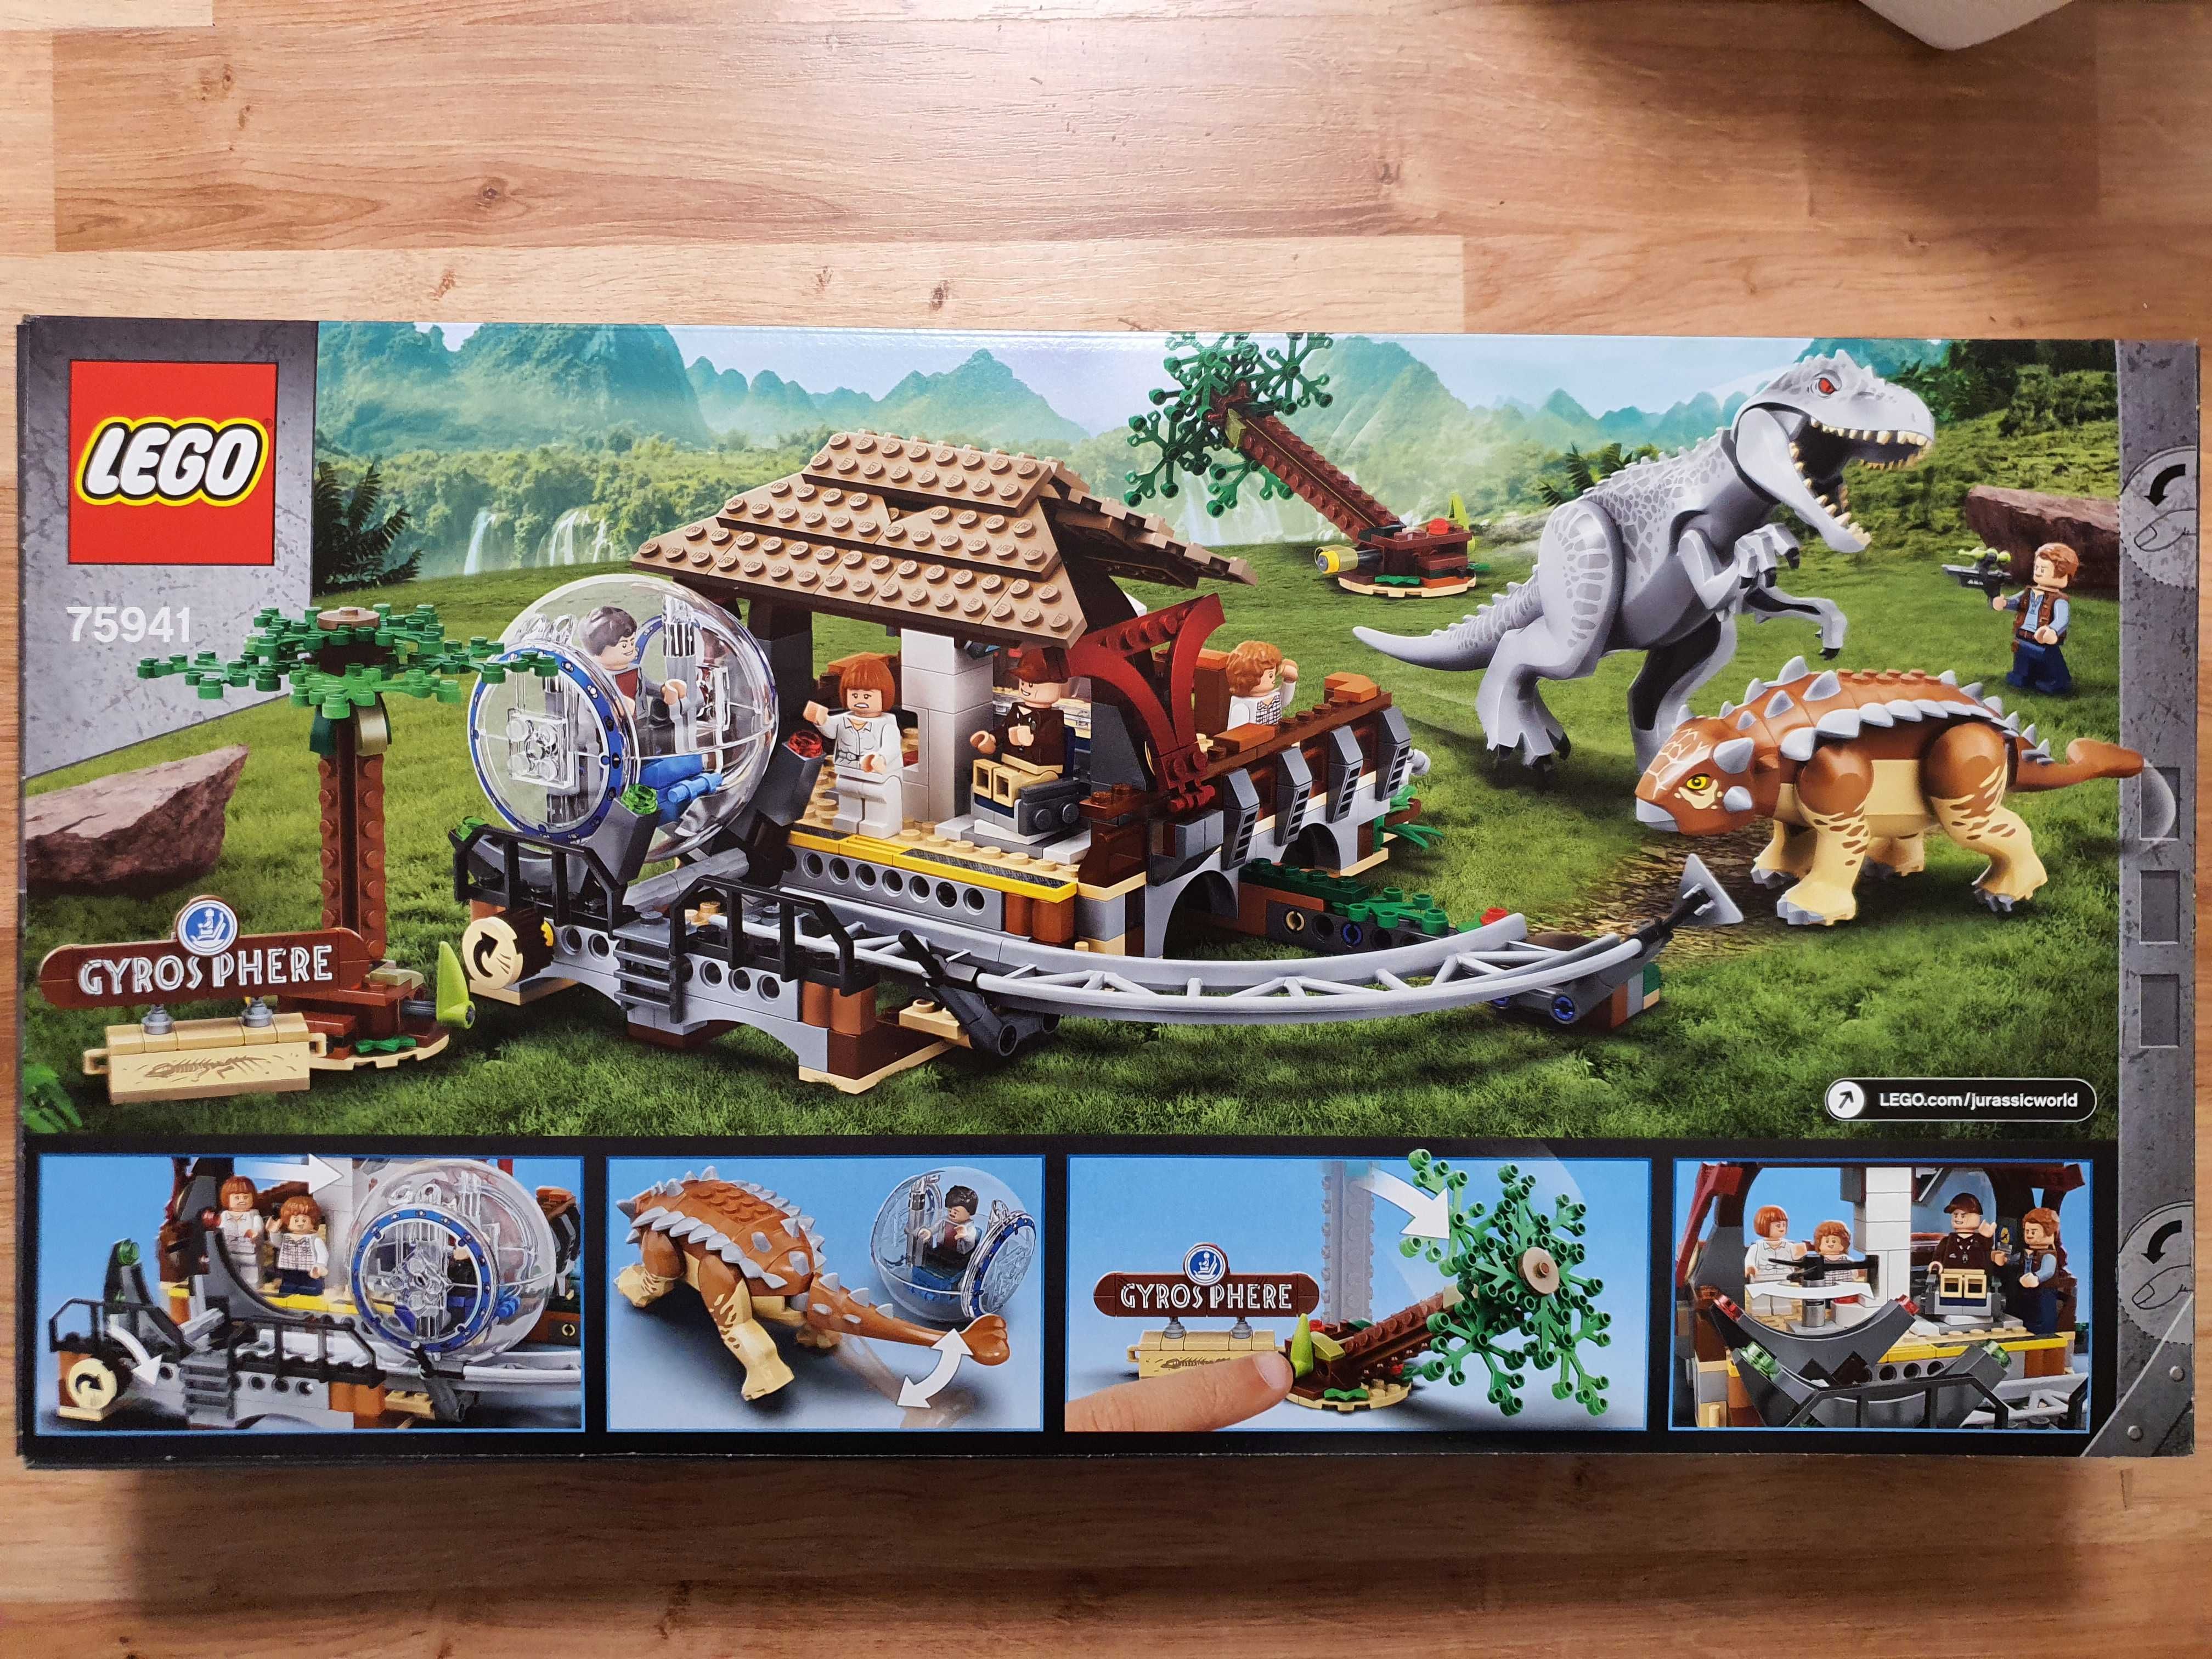 LEGO Jurassic World 75941 Indominus Rex kontra ankylozaur